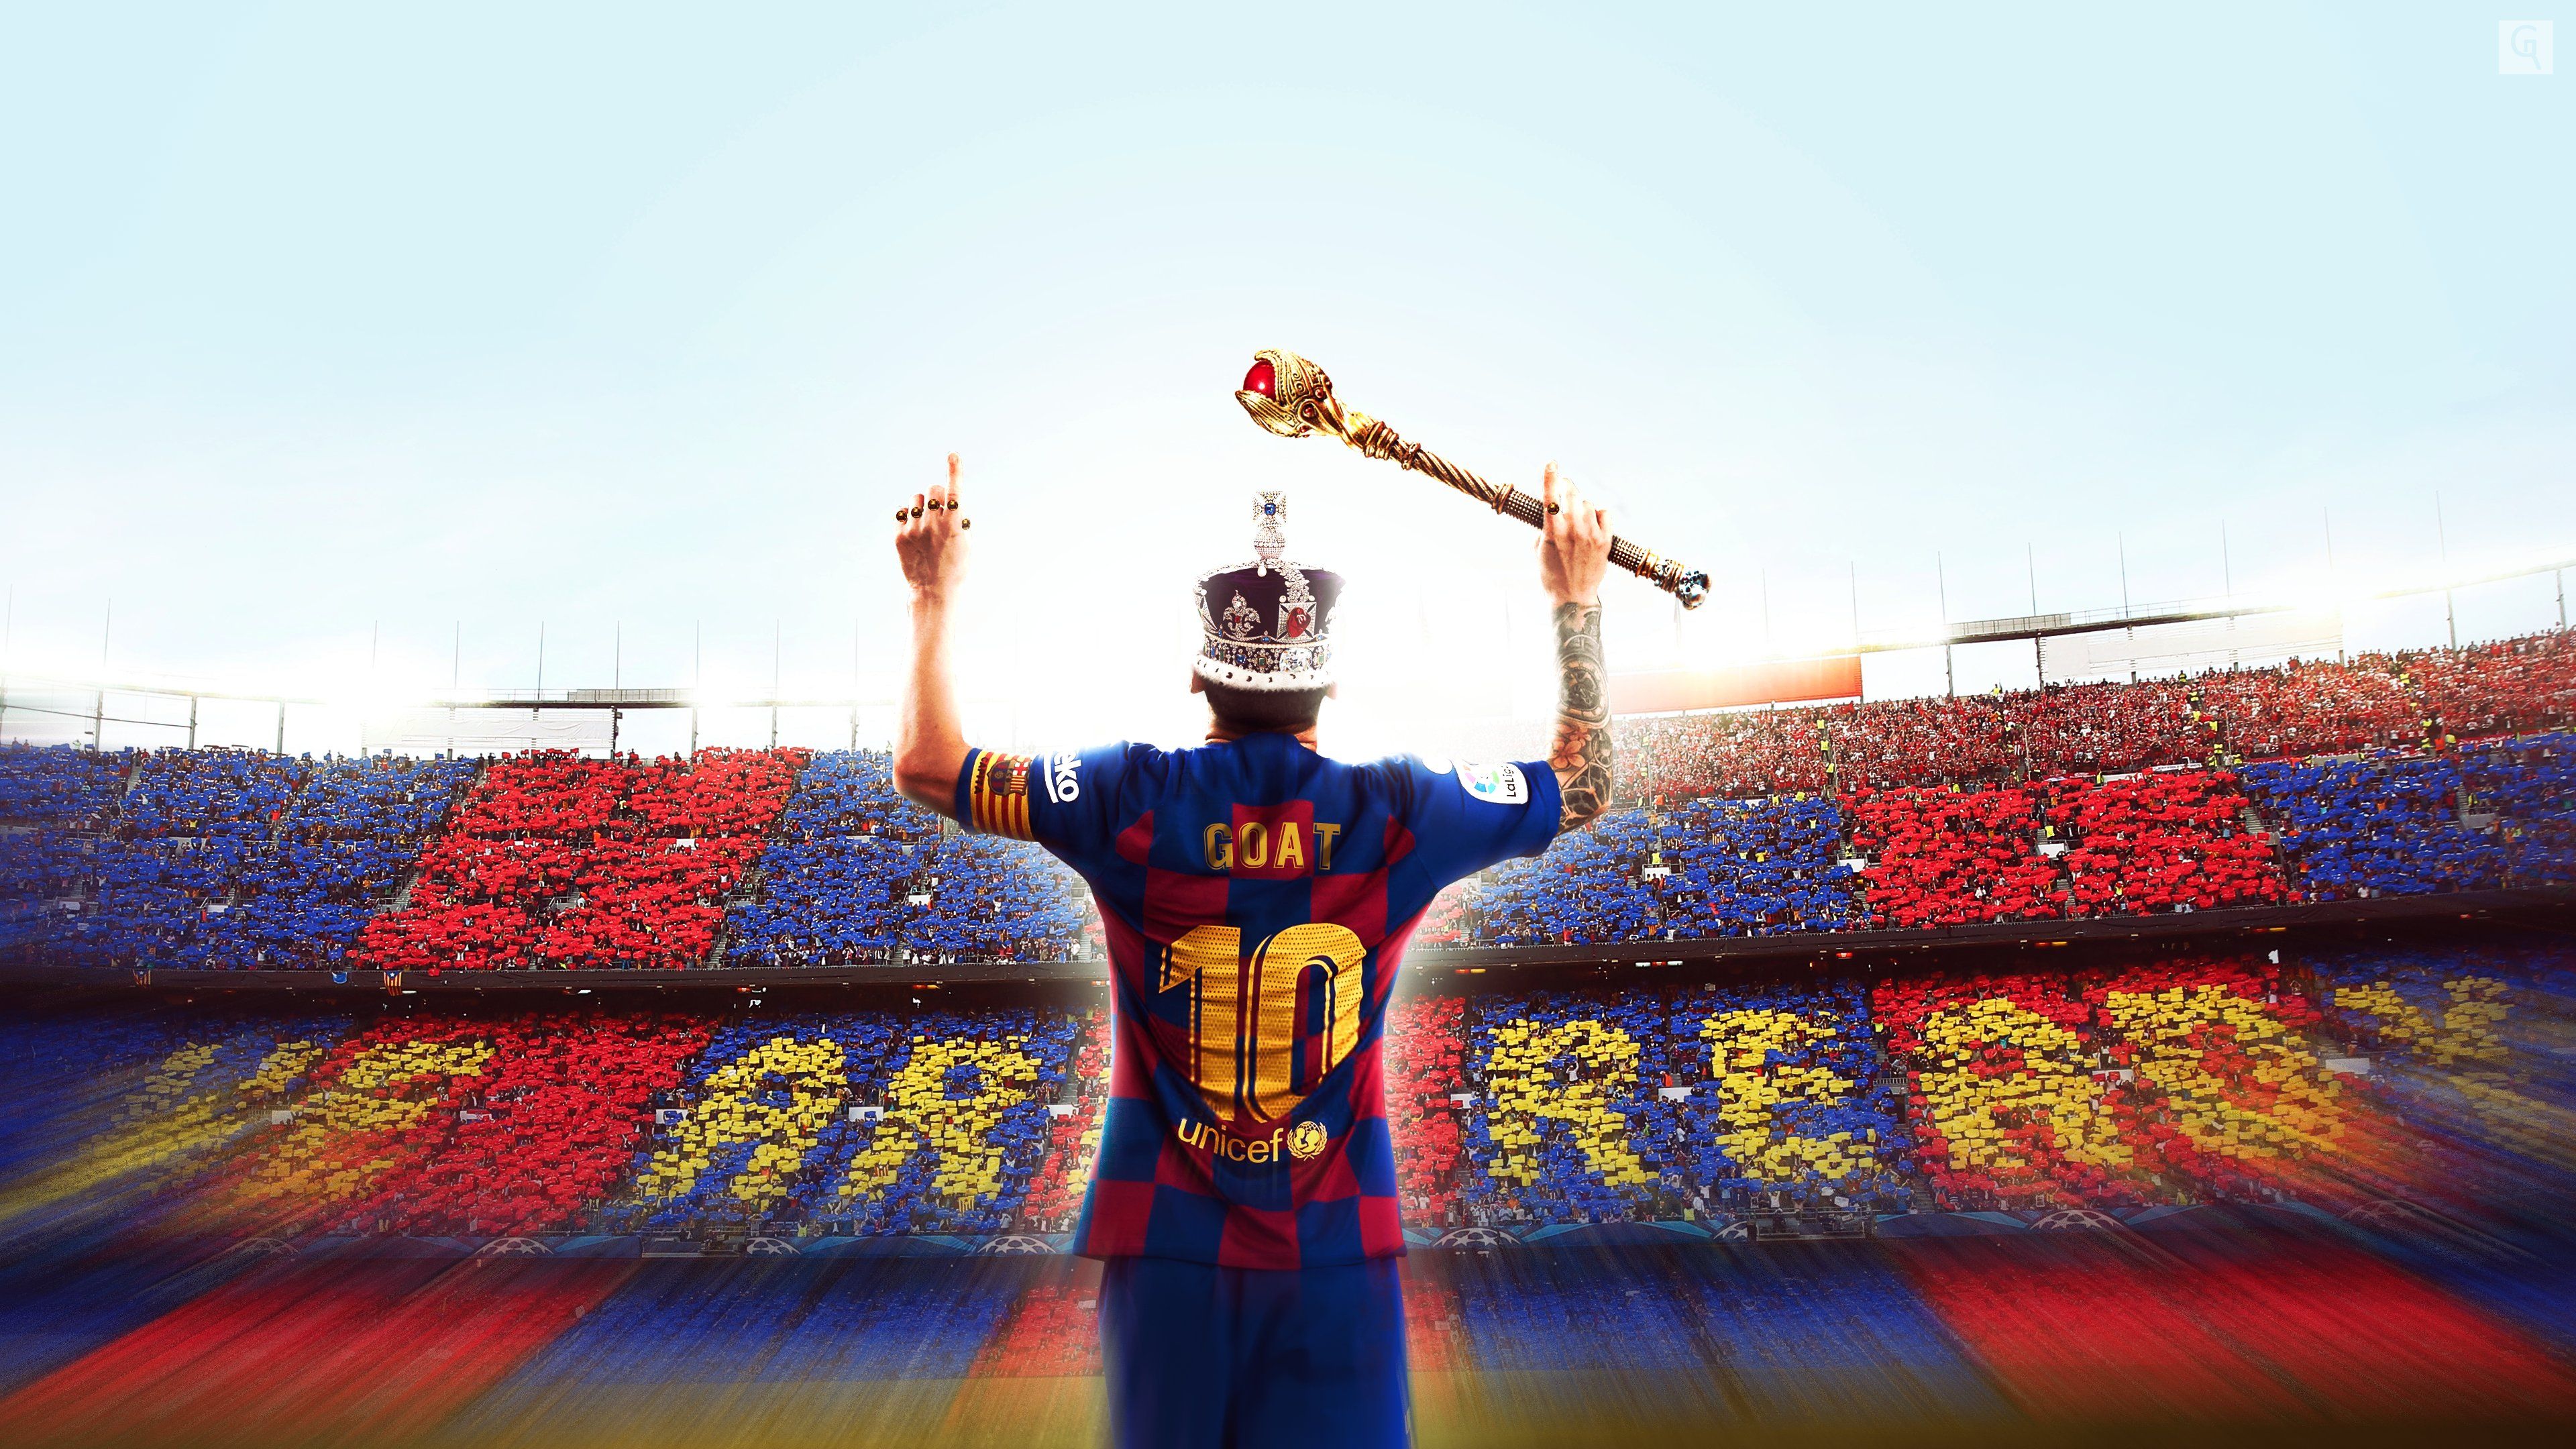 Camp Nou 🏟⚽️ #Barcelona #pumasmx #campnou #unsueño #inviertele | Instagram